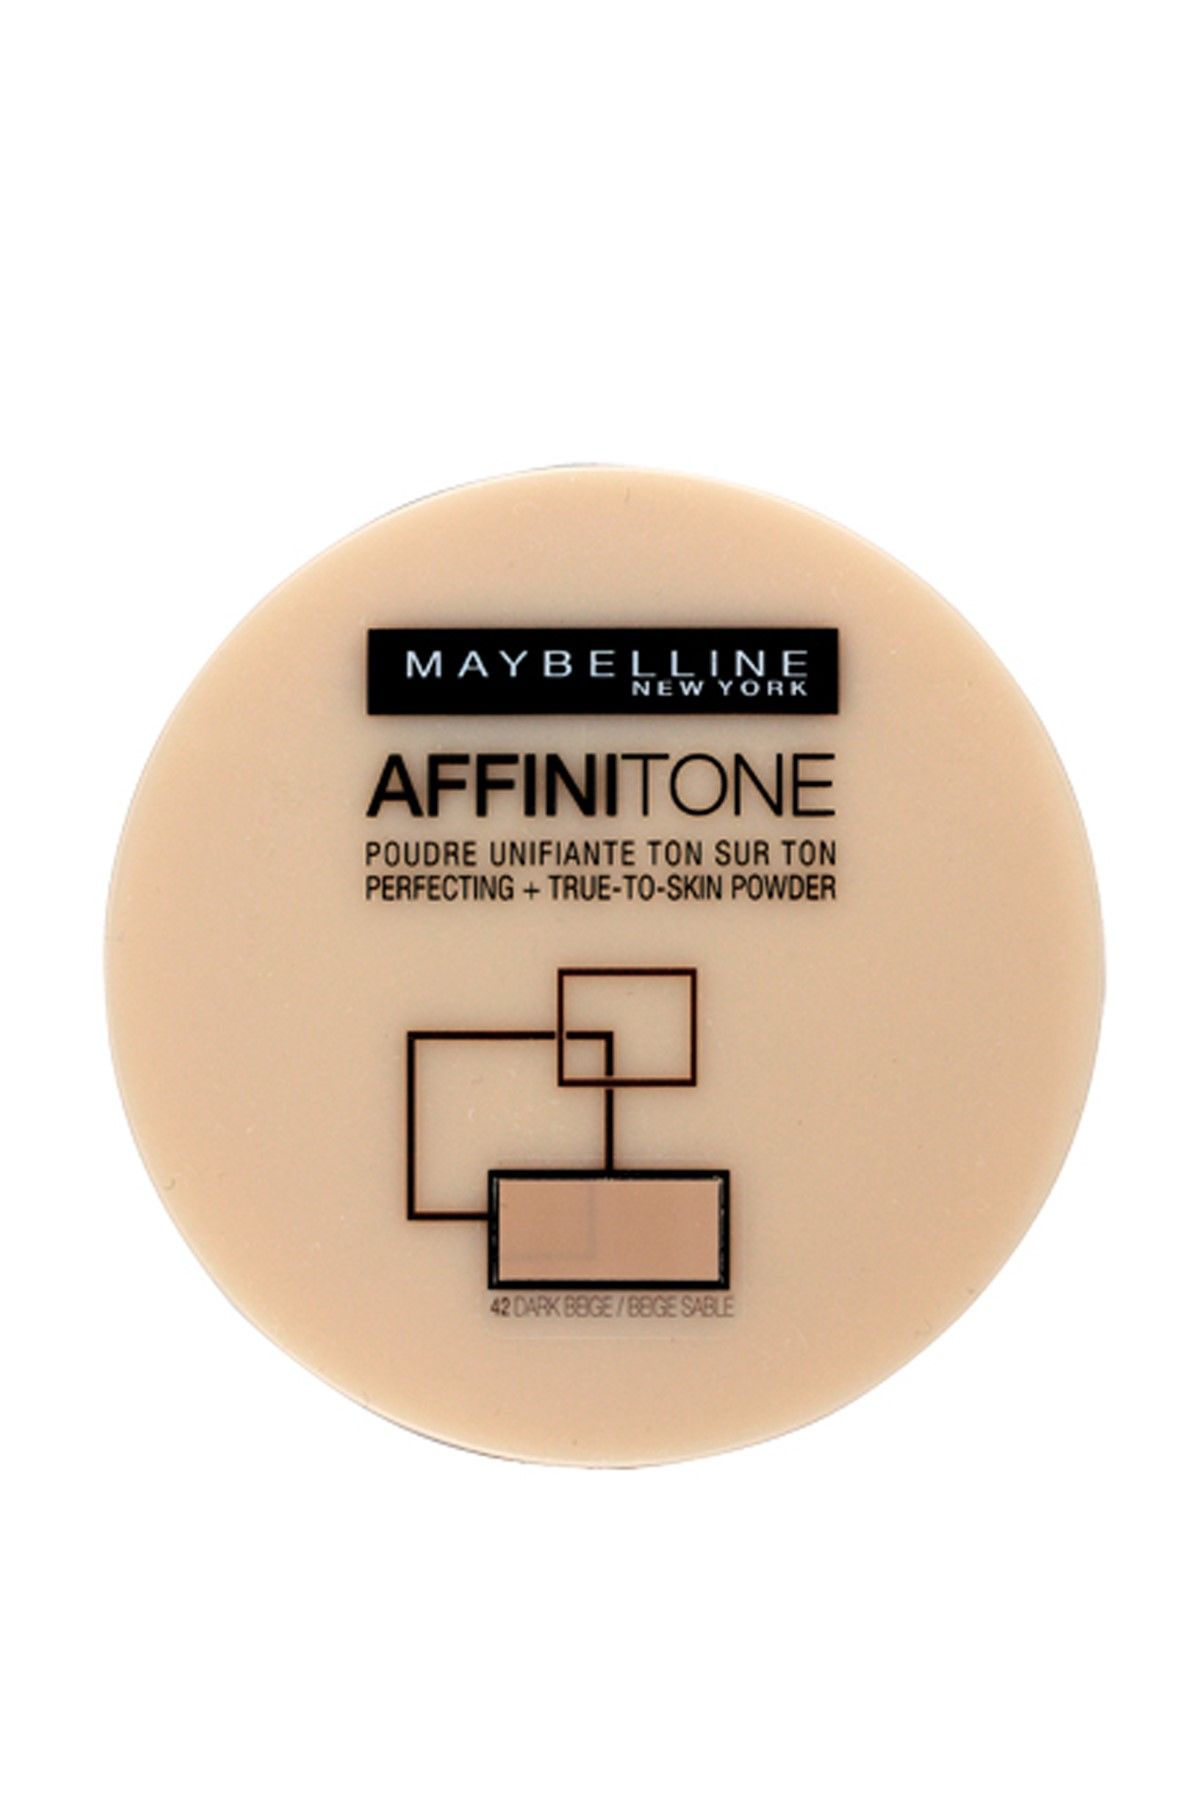 Maybelline New York پنکک و پودر آرایشی Affinitone Powder کاملا سبک و پوشش طبیعی شماره 42